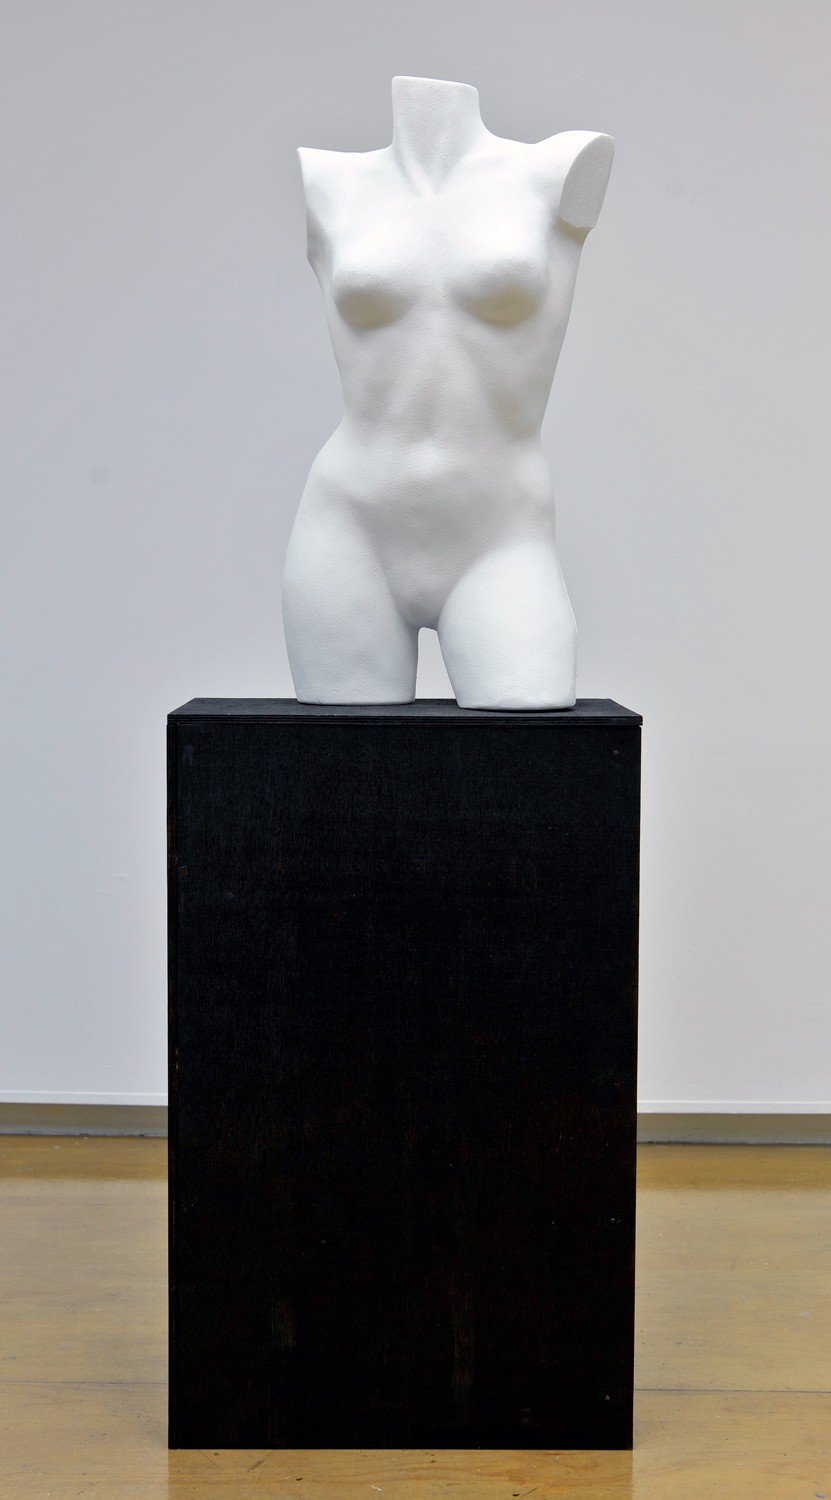 Lili Reynaud-DewarSome objects blackened and a body too, 2011Plinth, make-up, polystyrene155 x 52 x 36 cm